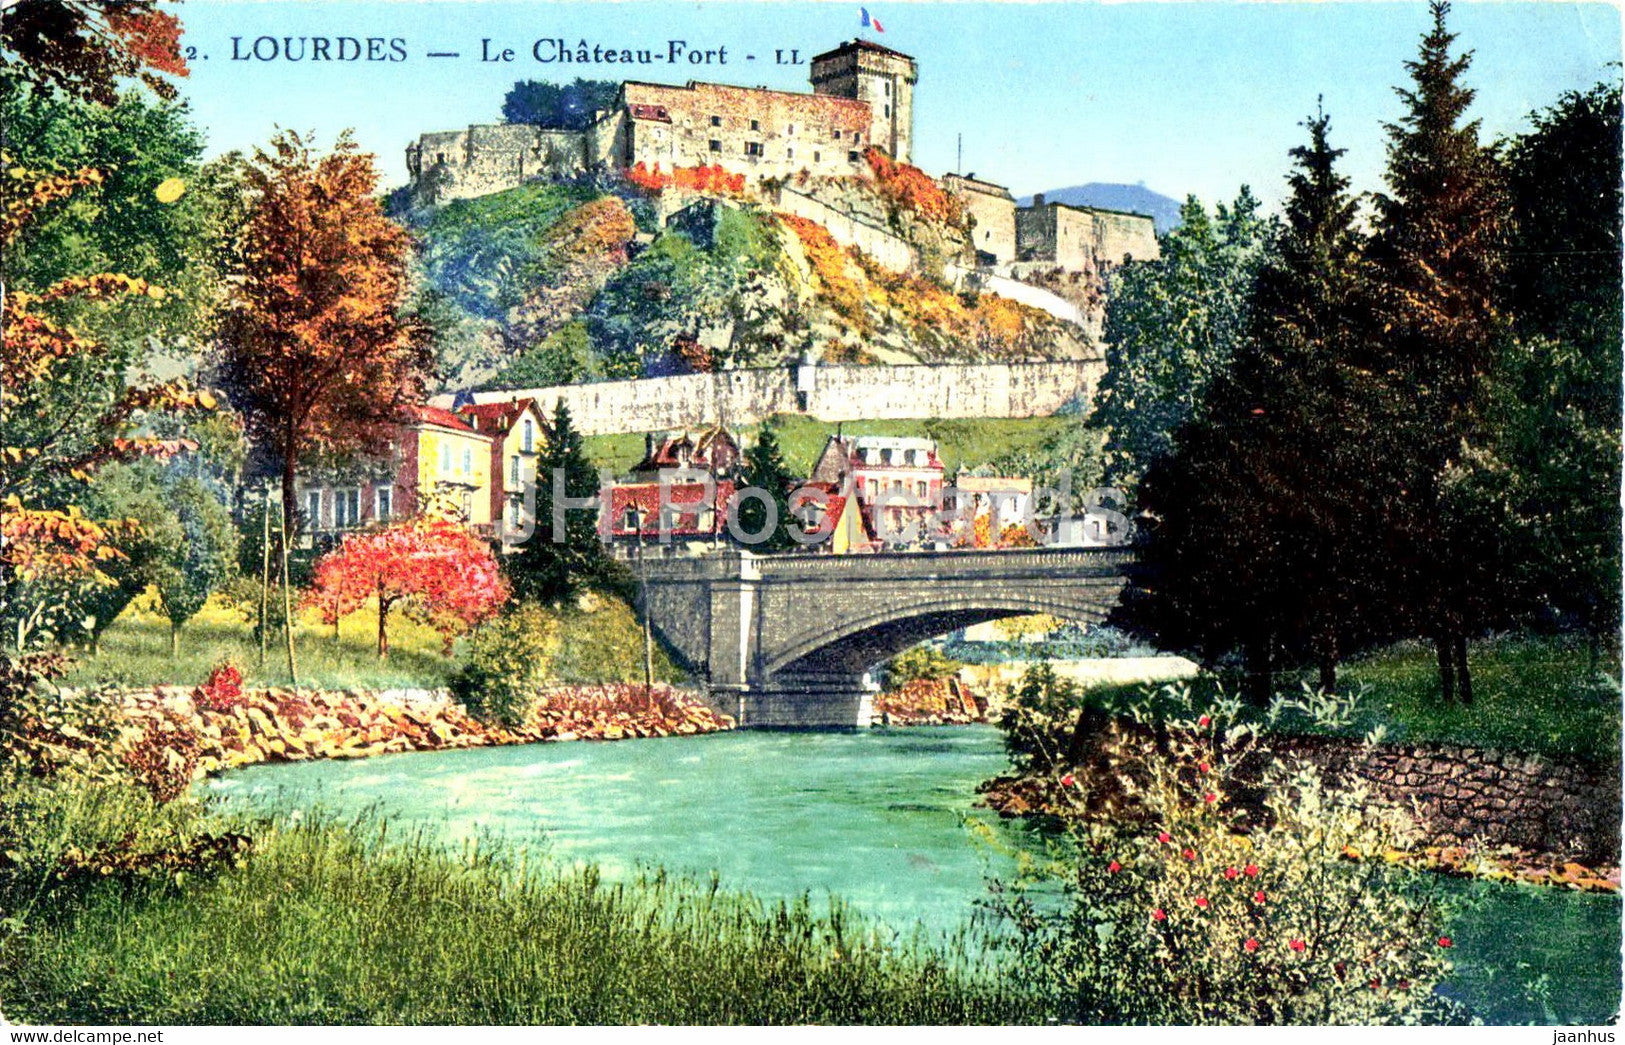 Lourdes - Le Chateau Fort - castle - 22 - old postcard - France - unused - JH Postcards